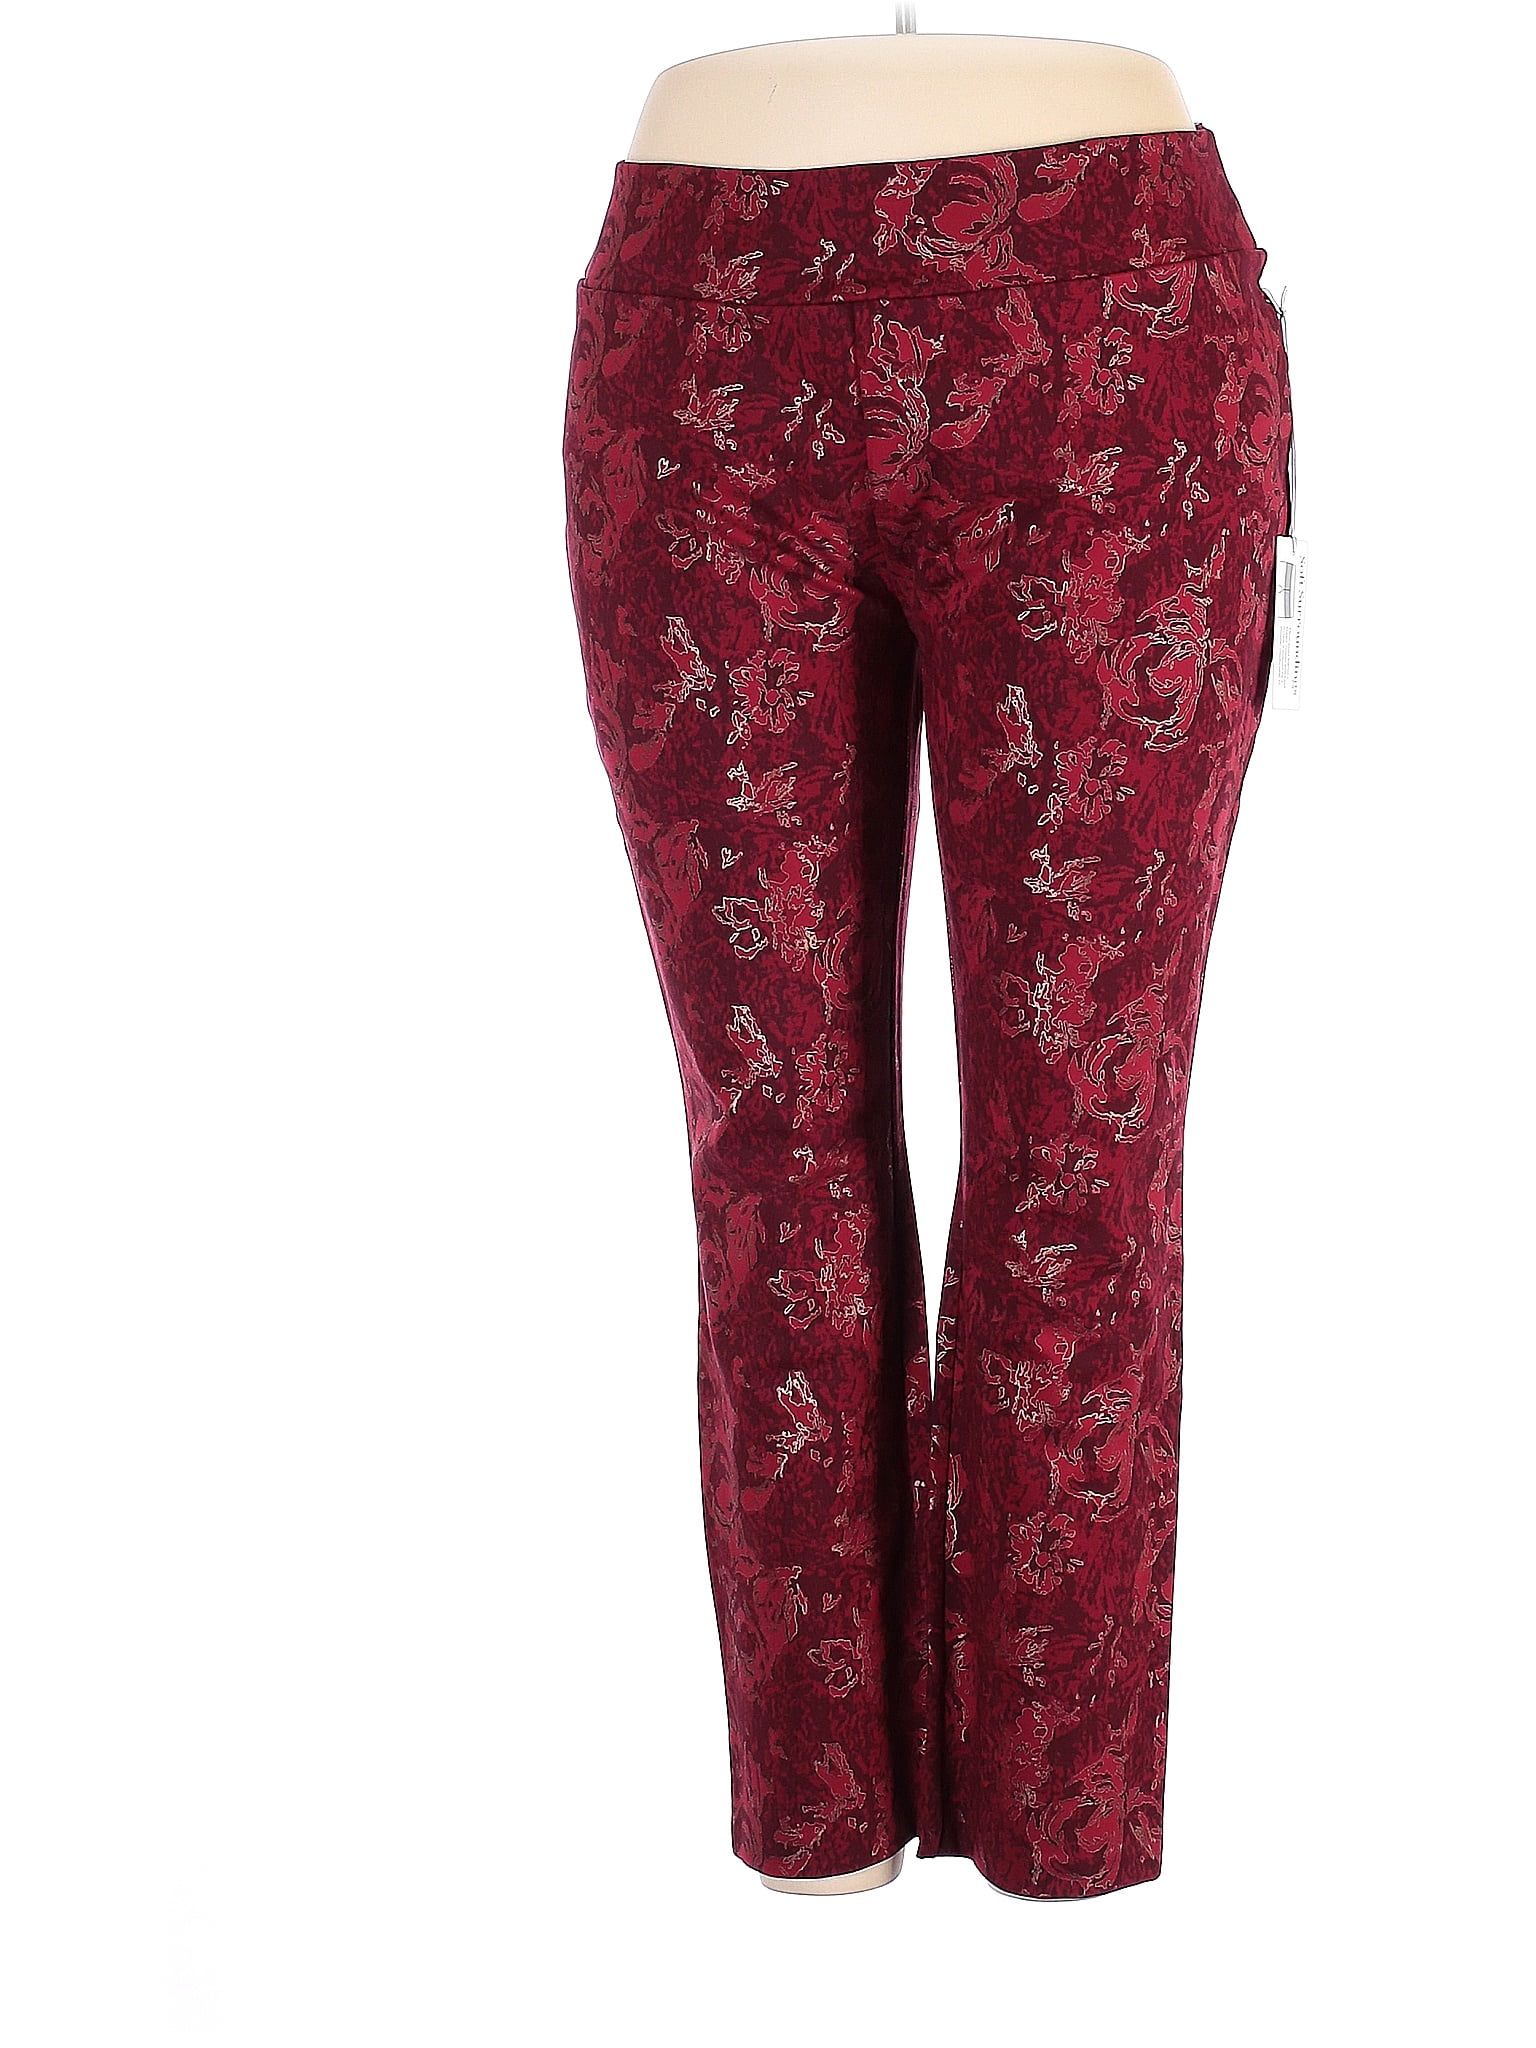 Soft Surroundings Floral Maroon Red Dress Pants Size 2X (Plus) - 67% ...